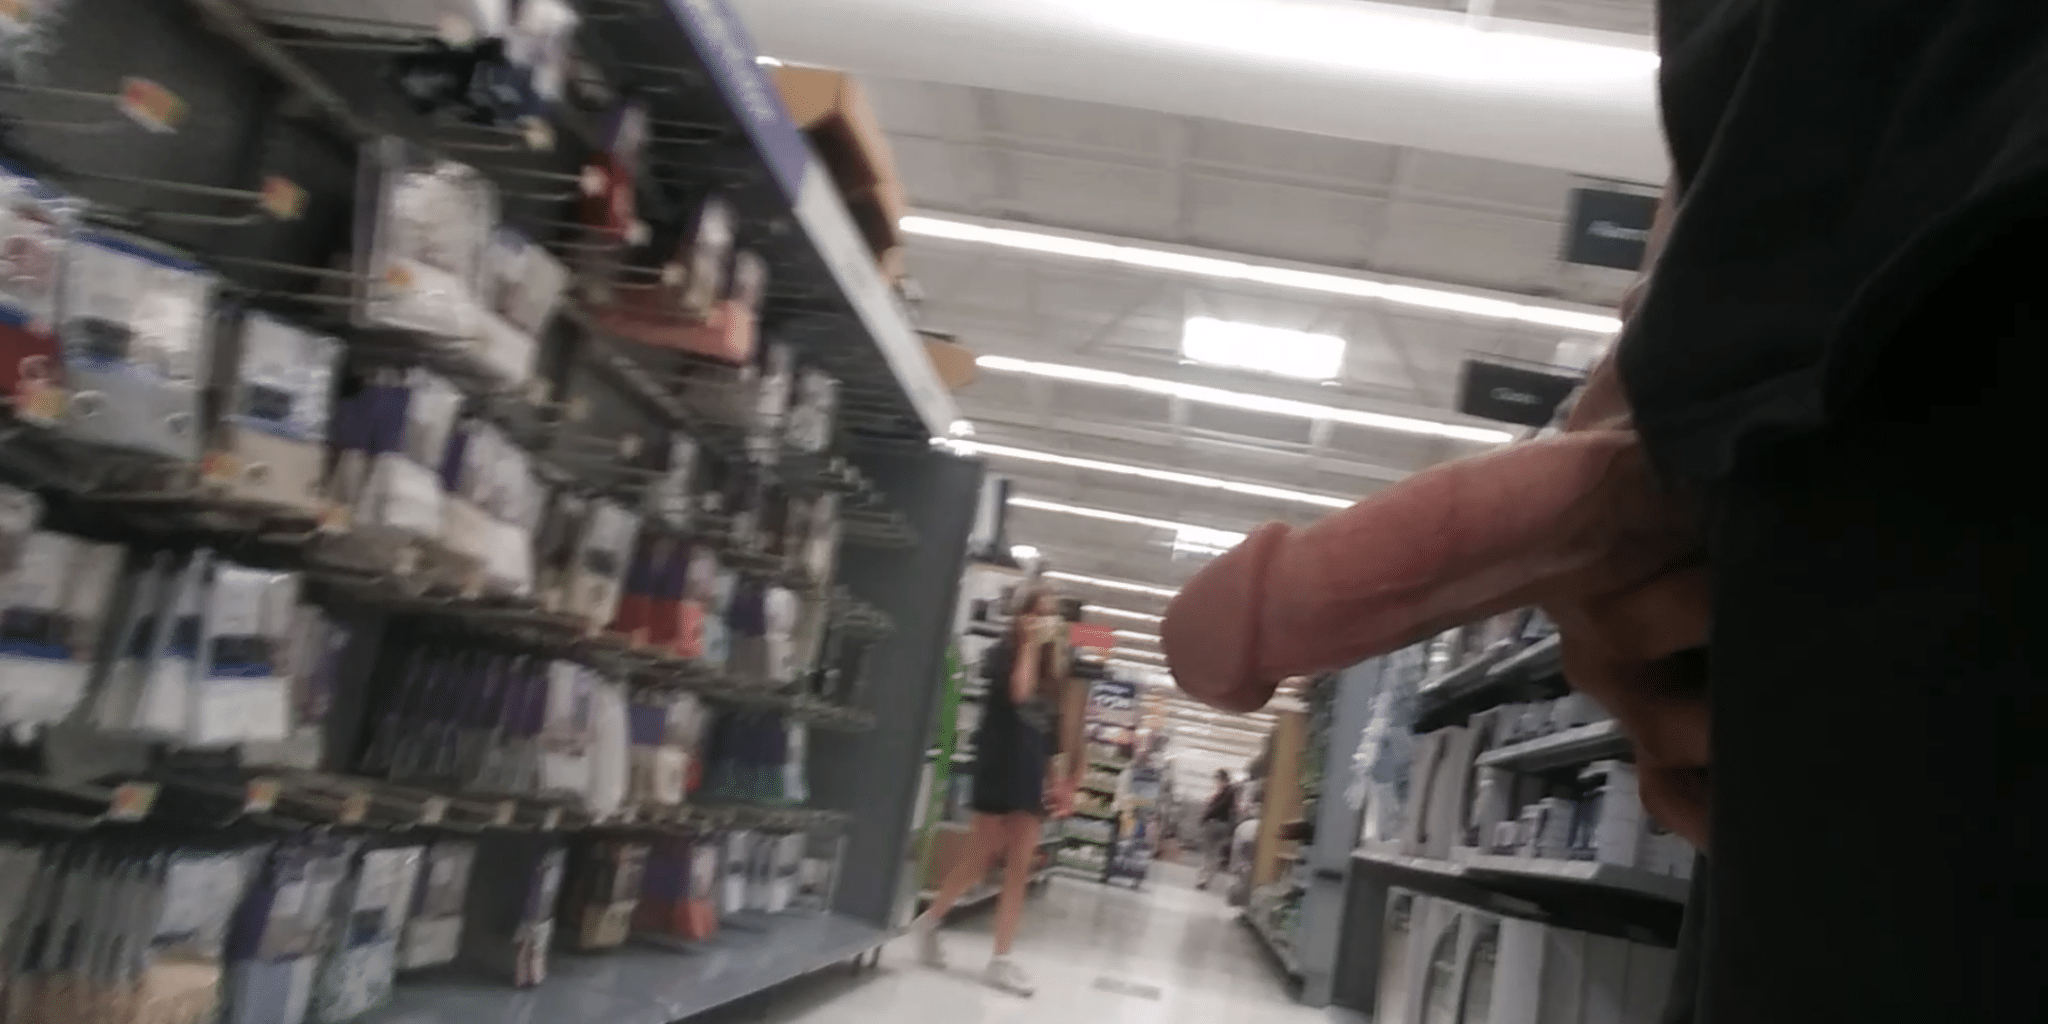 Cock Flash She Looks Caught in Walmart real nudity public flashing flashing store dick flash